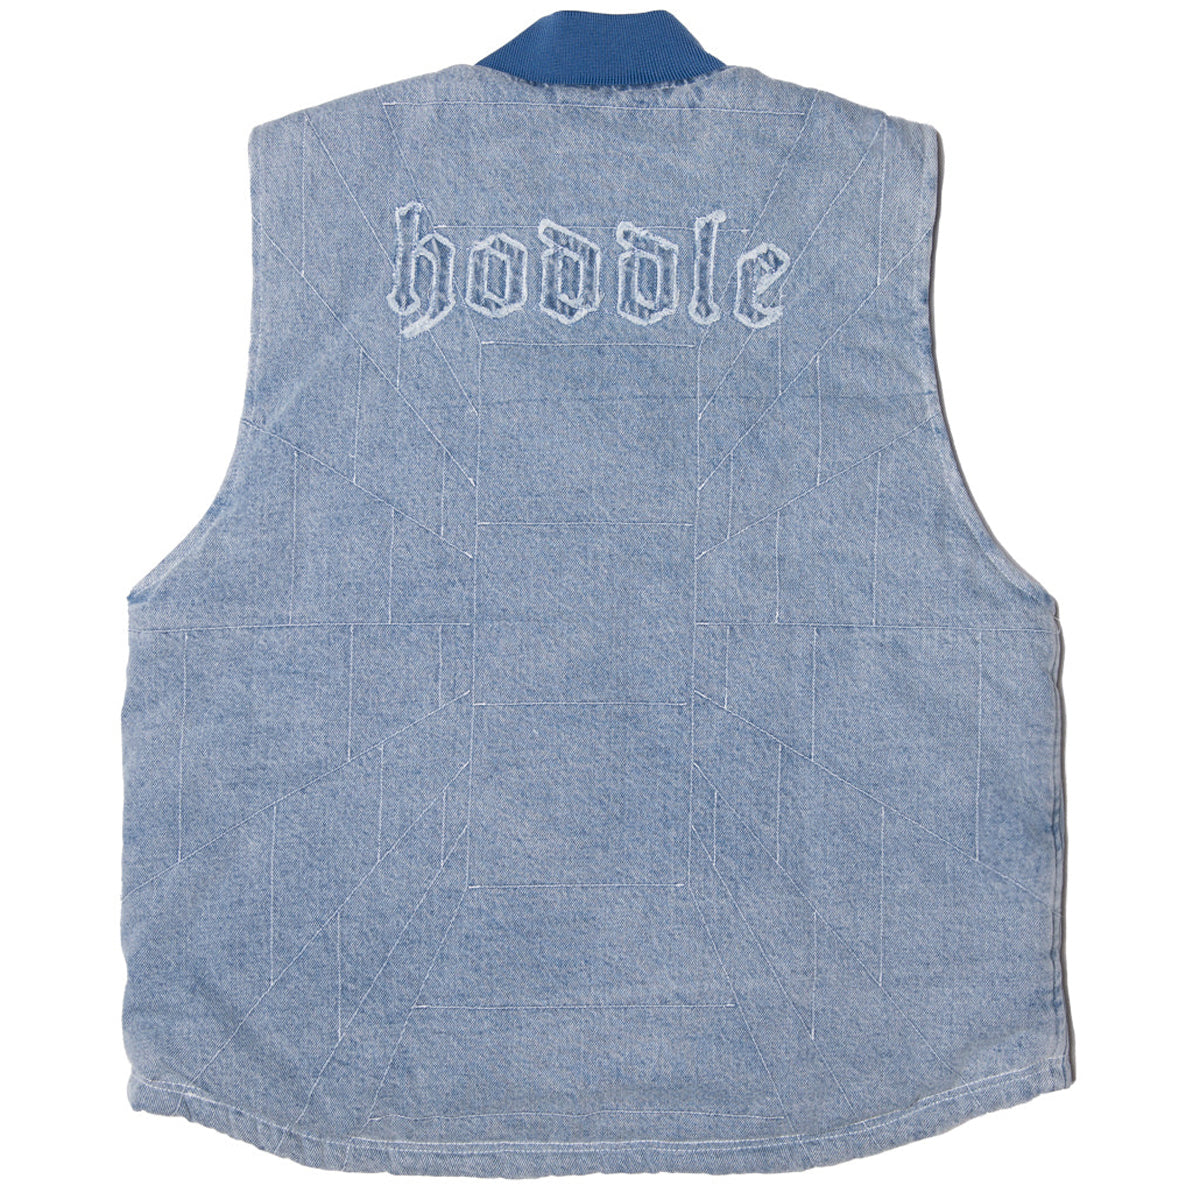 Hoddle Zip Up Carpenter Vest Jacket - Blue Denim Wash image 2